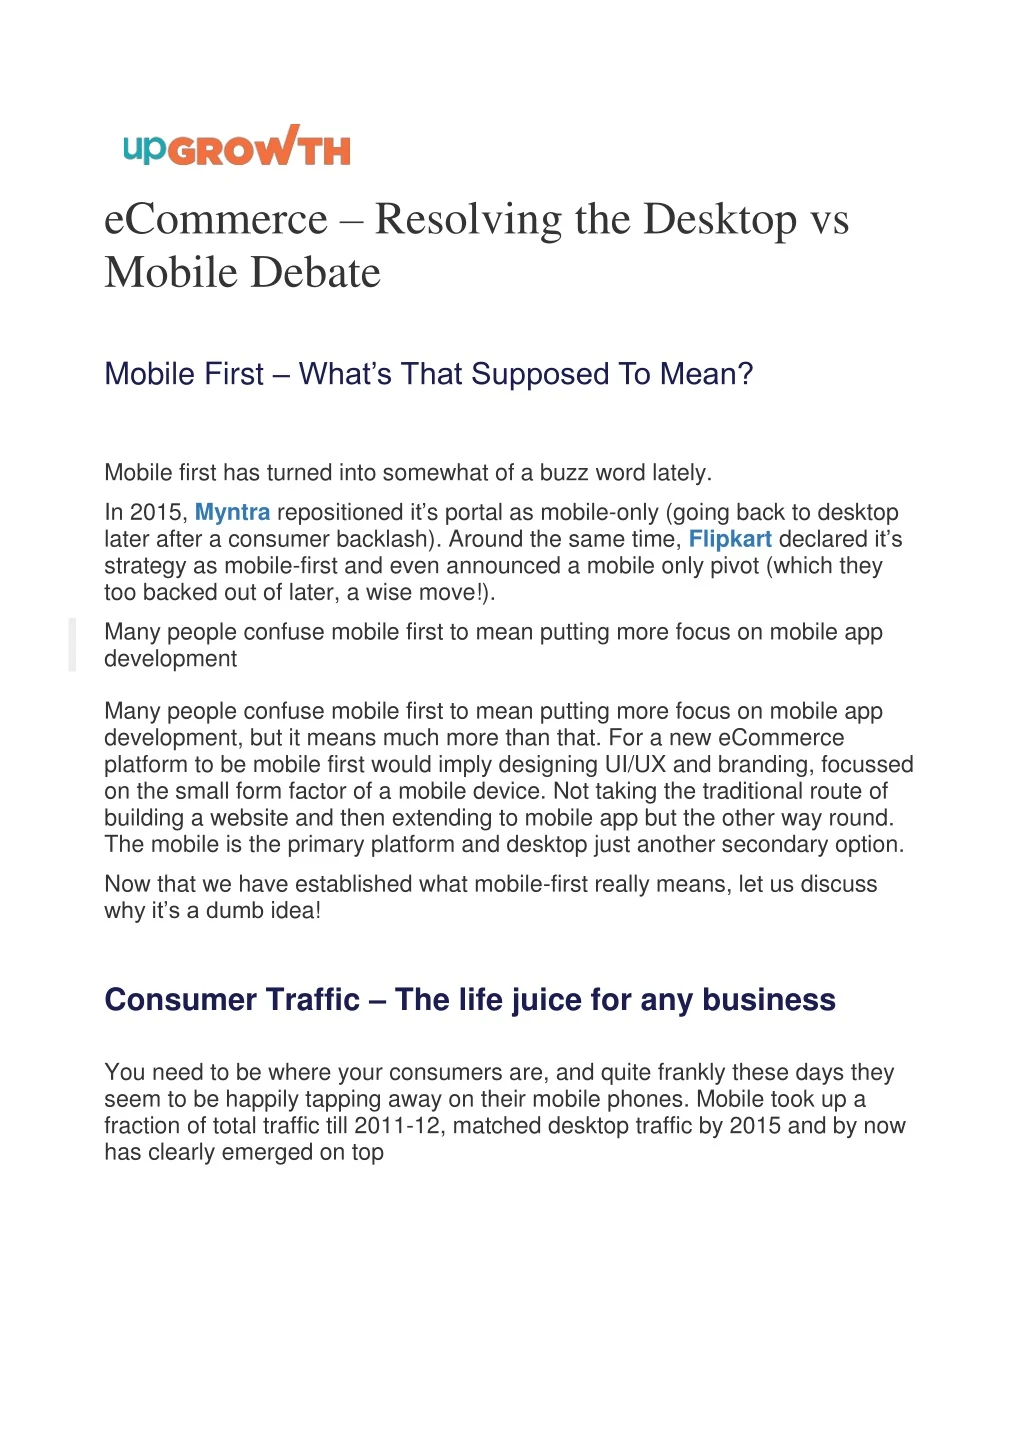 ecommerce resolving the desktop vs mobile debate